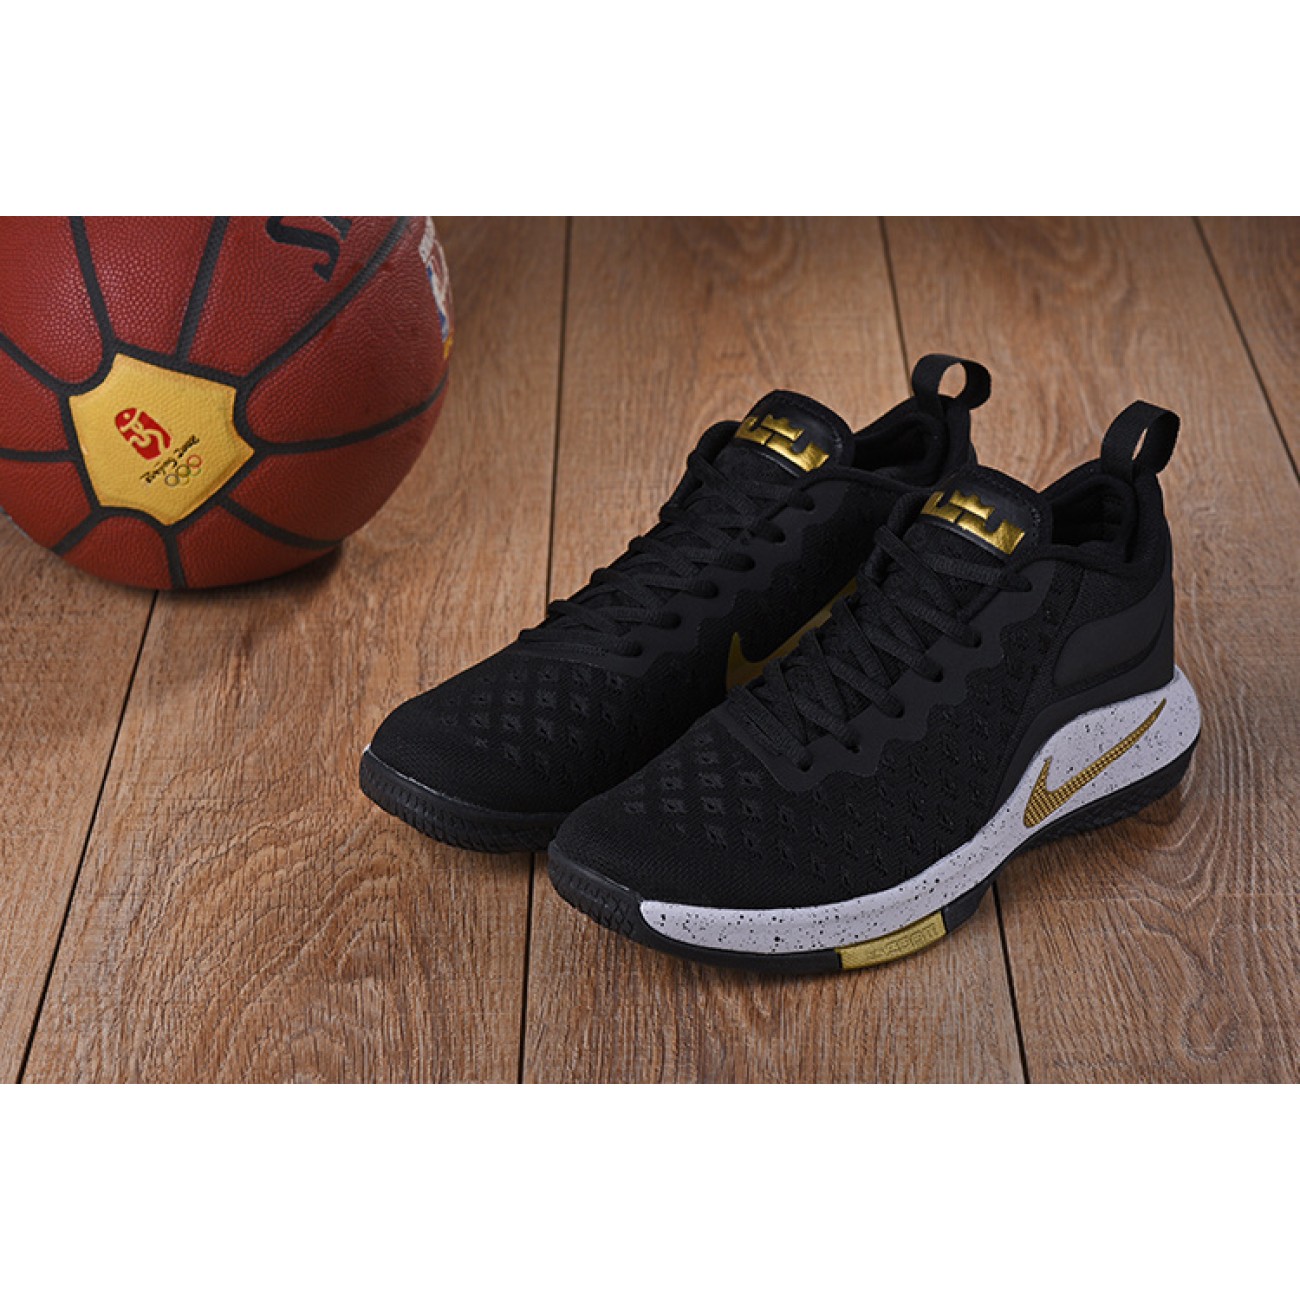 Lebron Witness 2 Flyknit Basketball Shoes Black/Gold